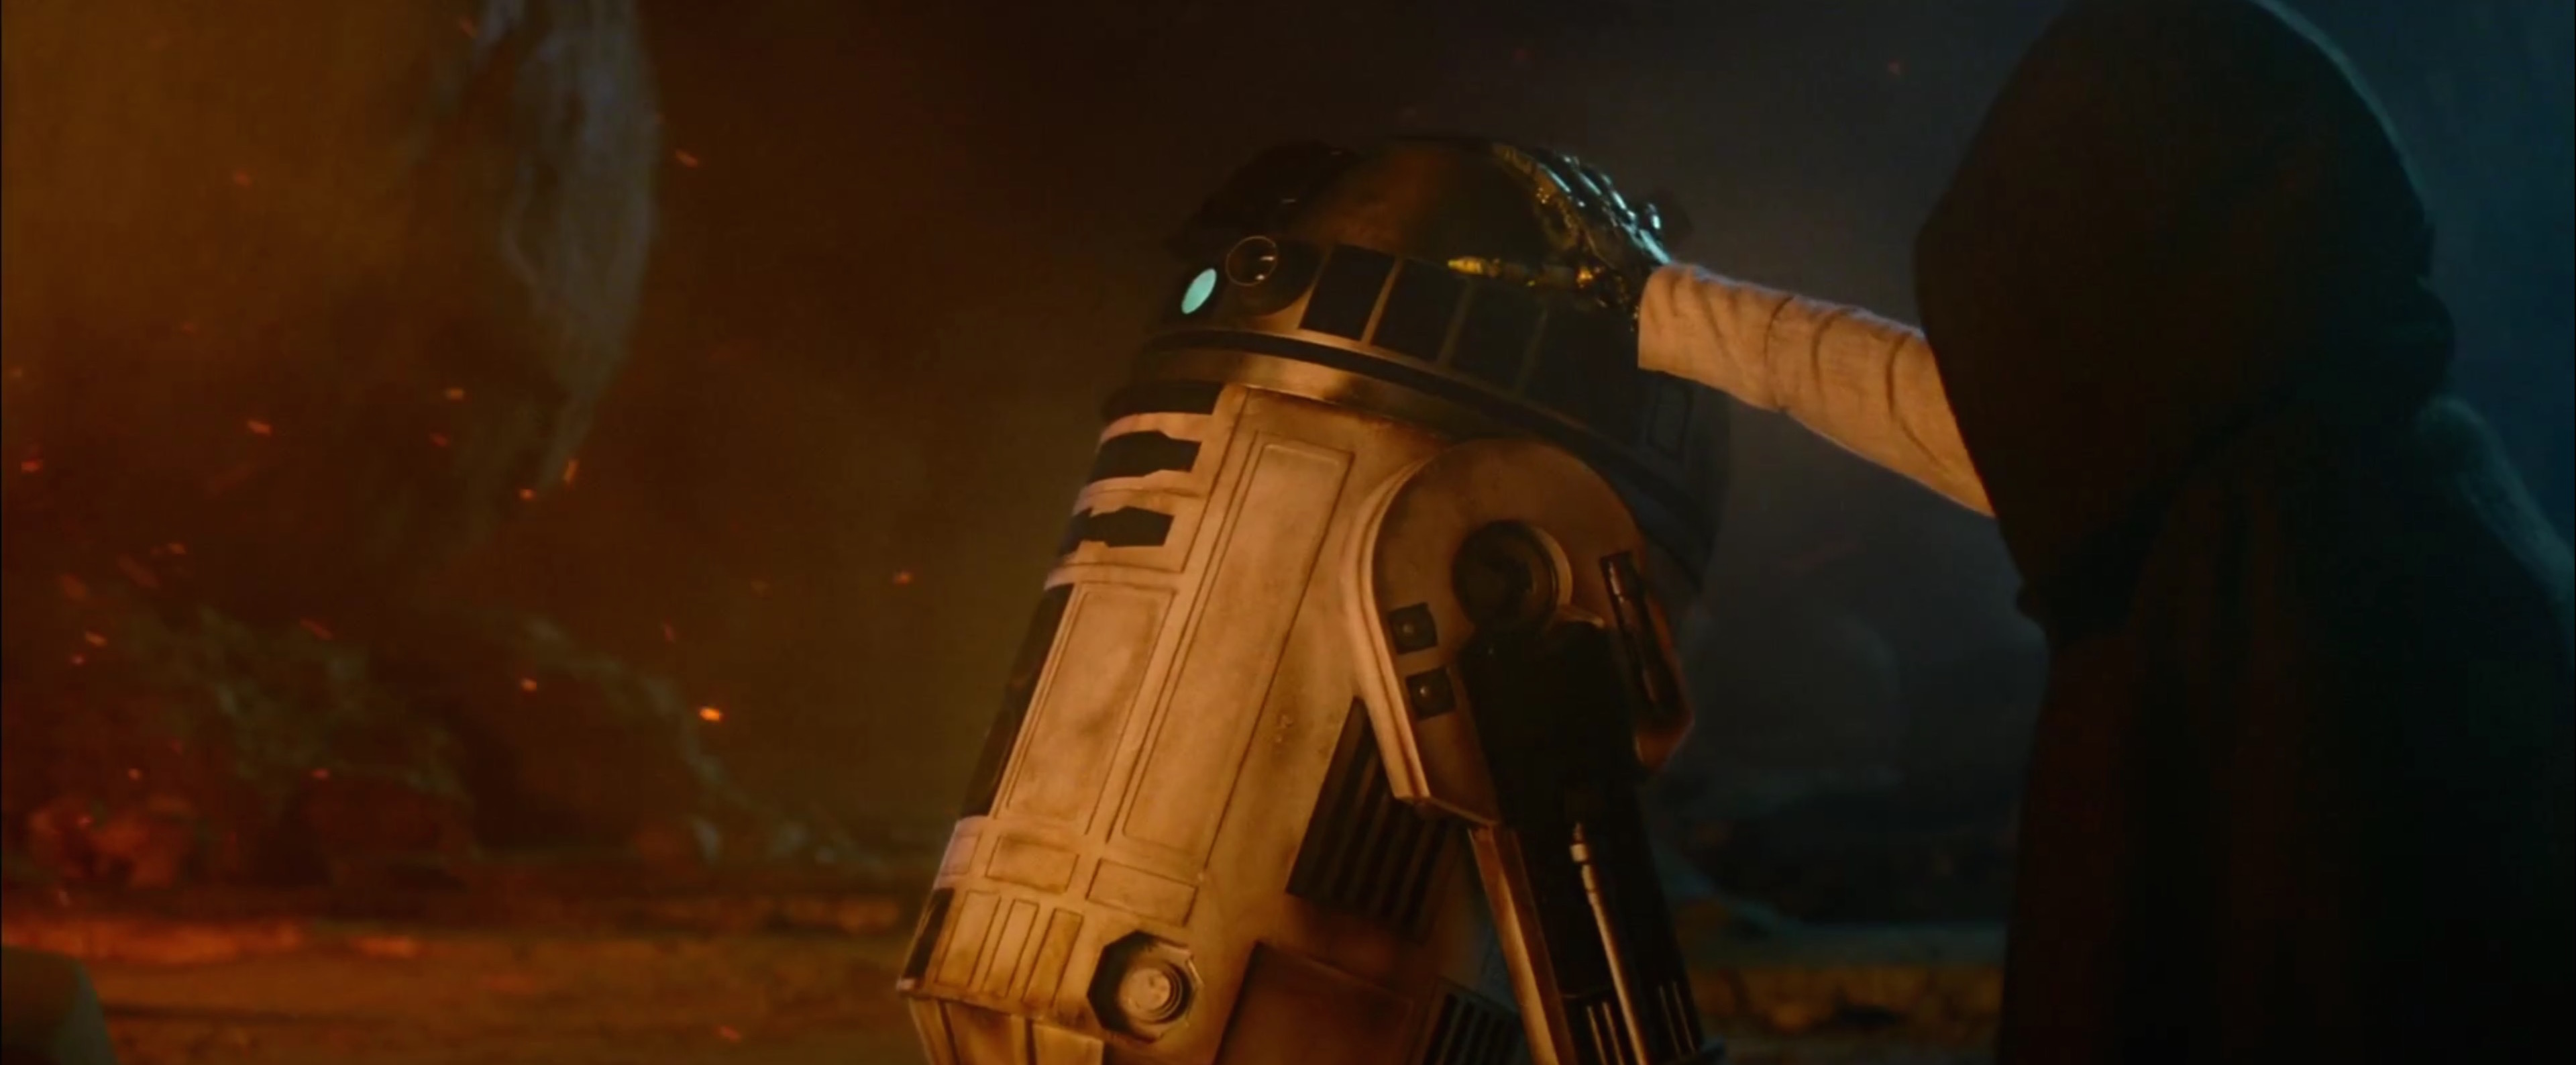 Star Wars VII The Force Awakens New Trailer_1